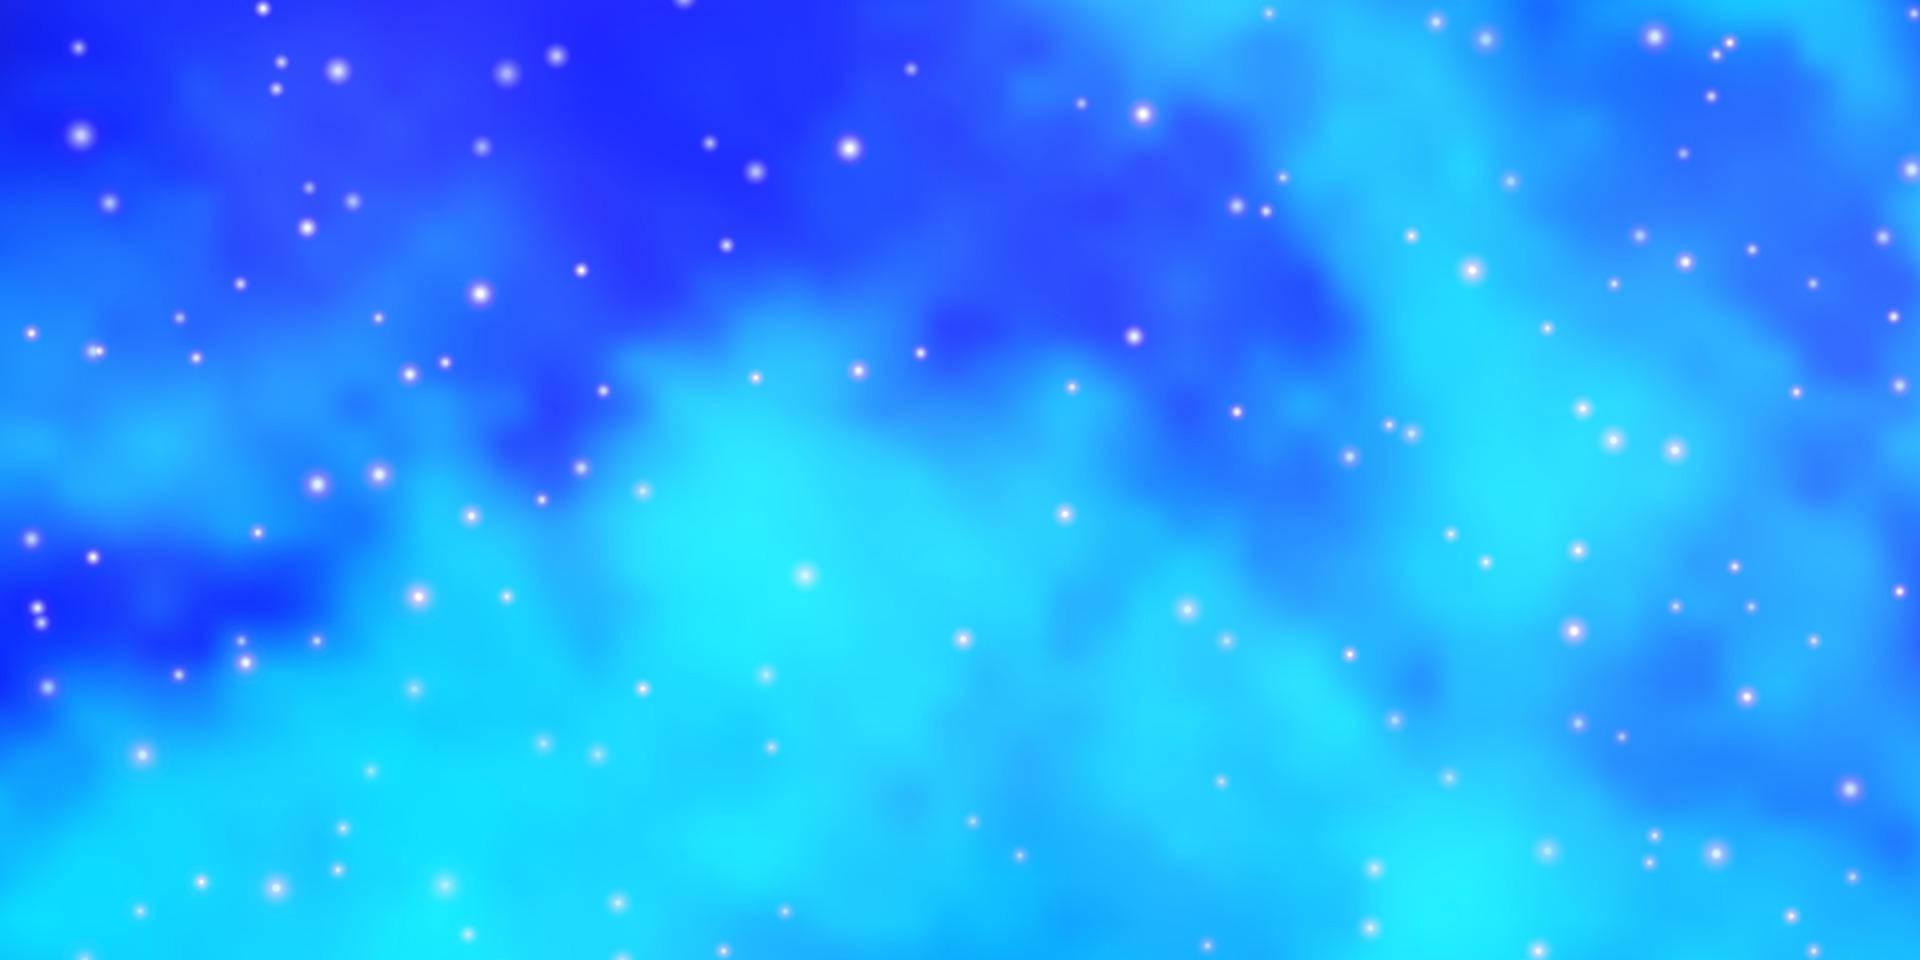 plantilla de vector azul claro con estrellas de neón.